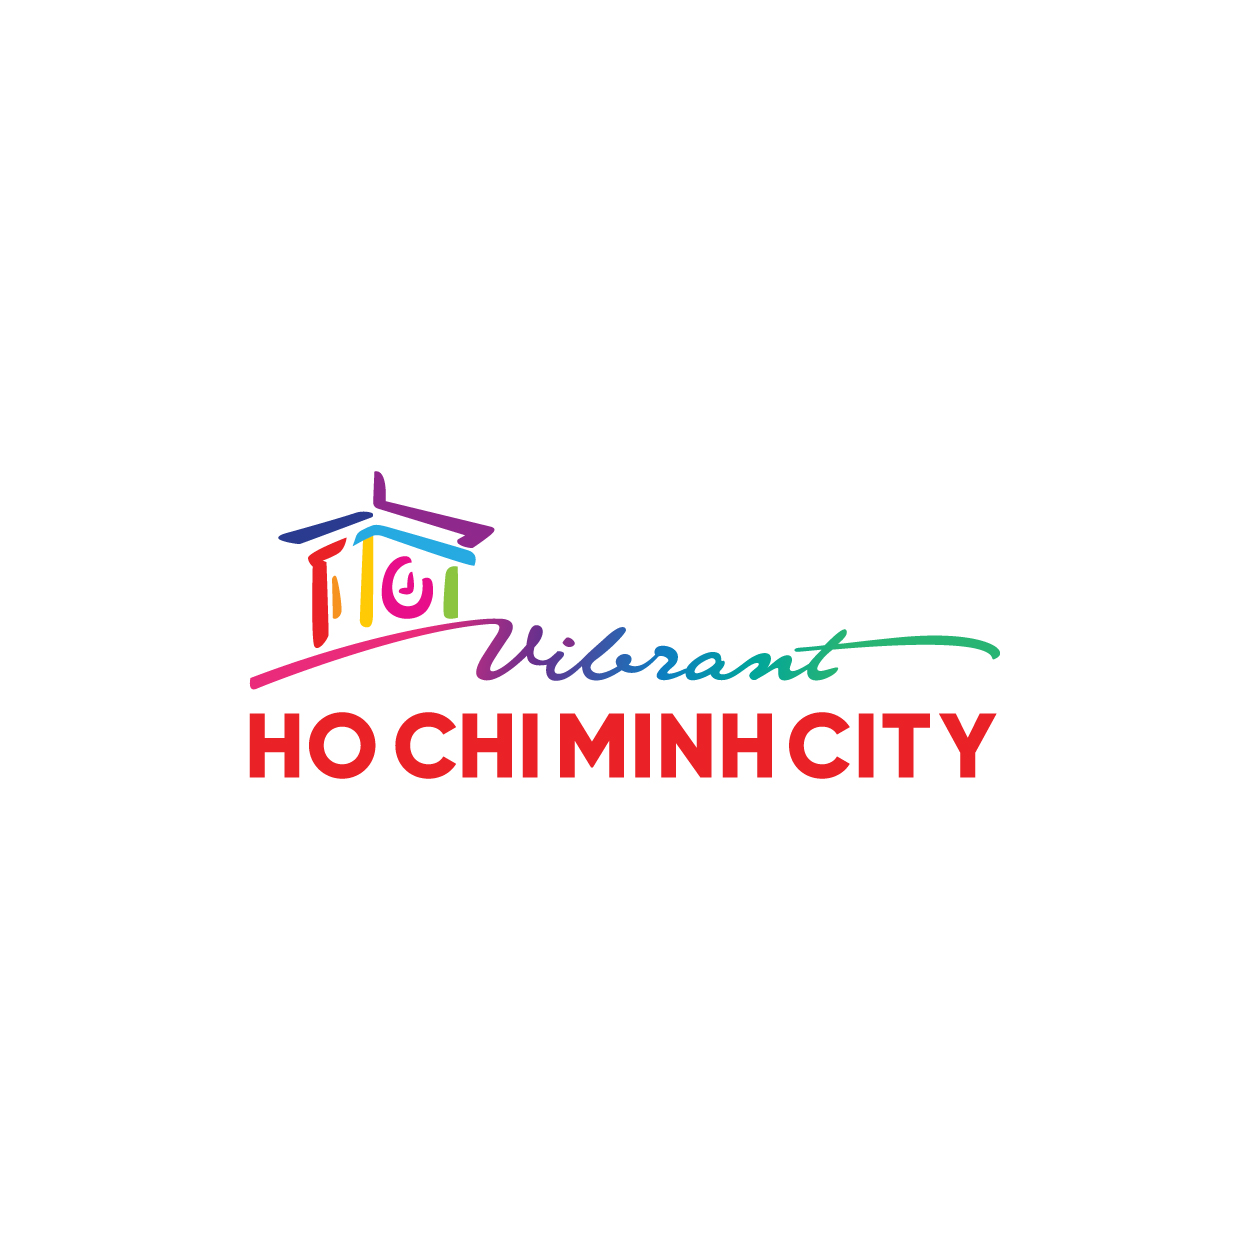 HCMC Department of Tourism